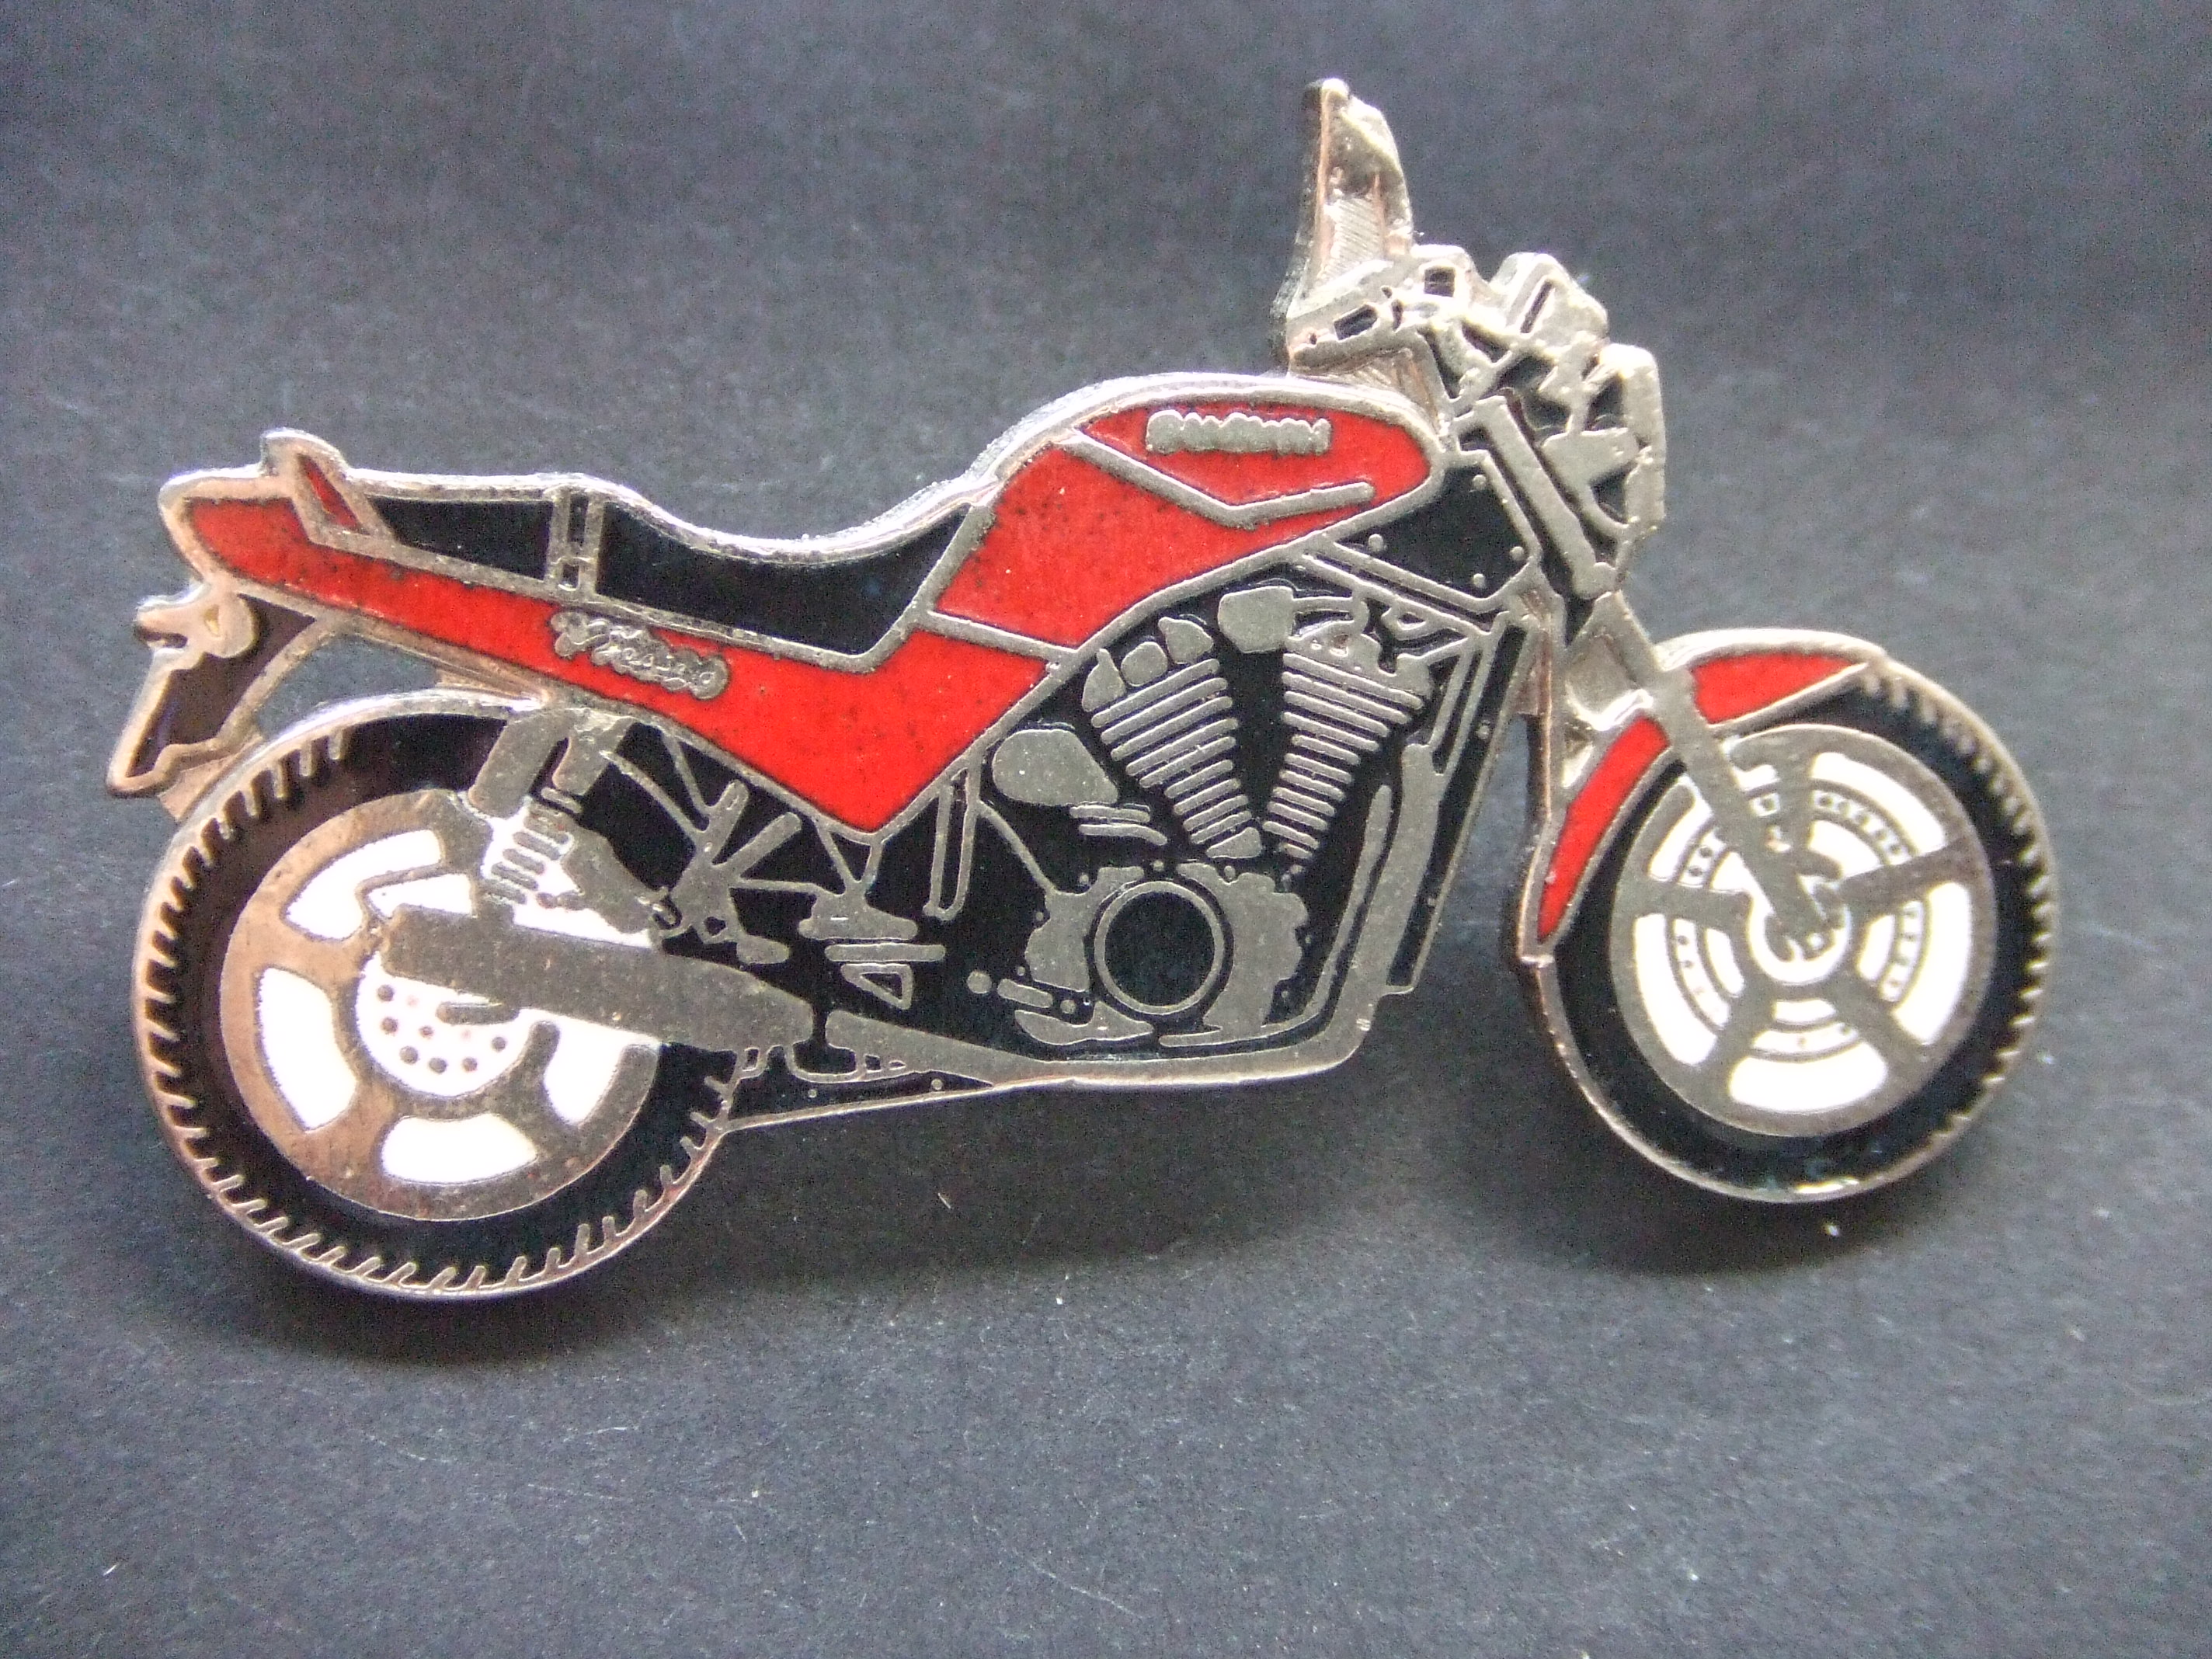 Rovero motorcycles